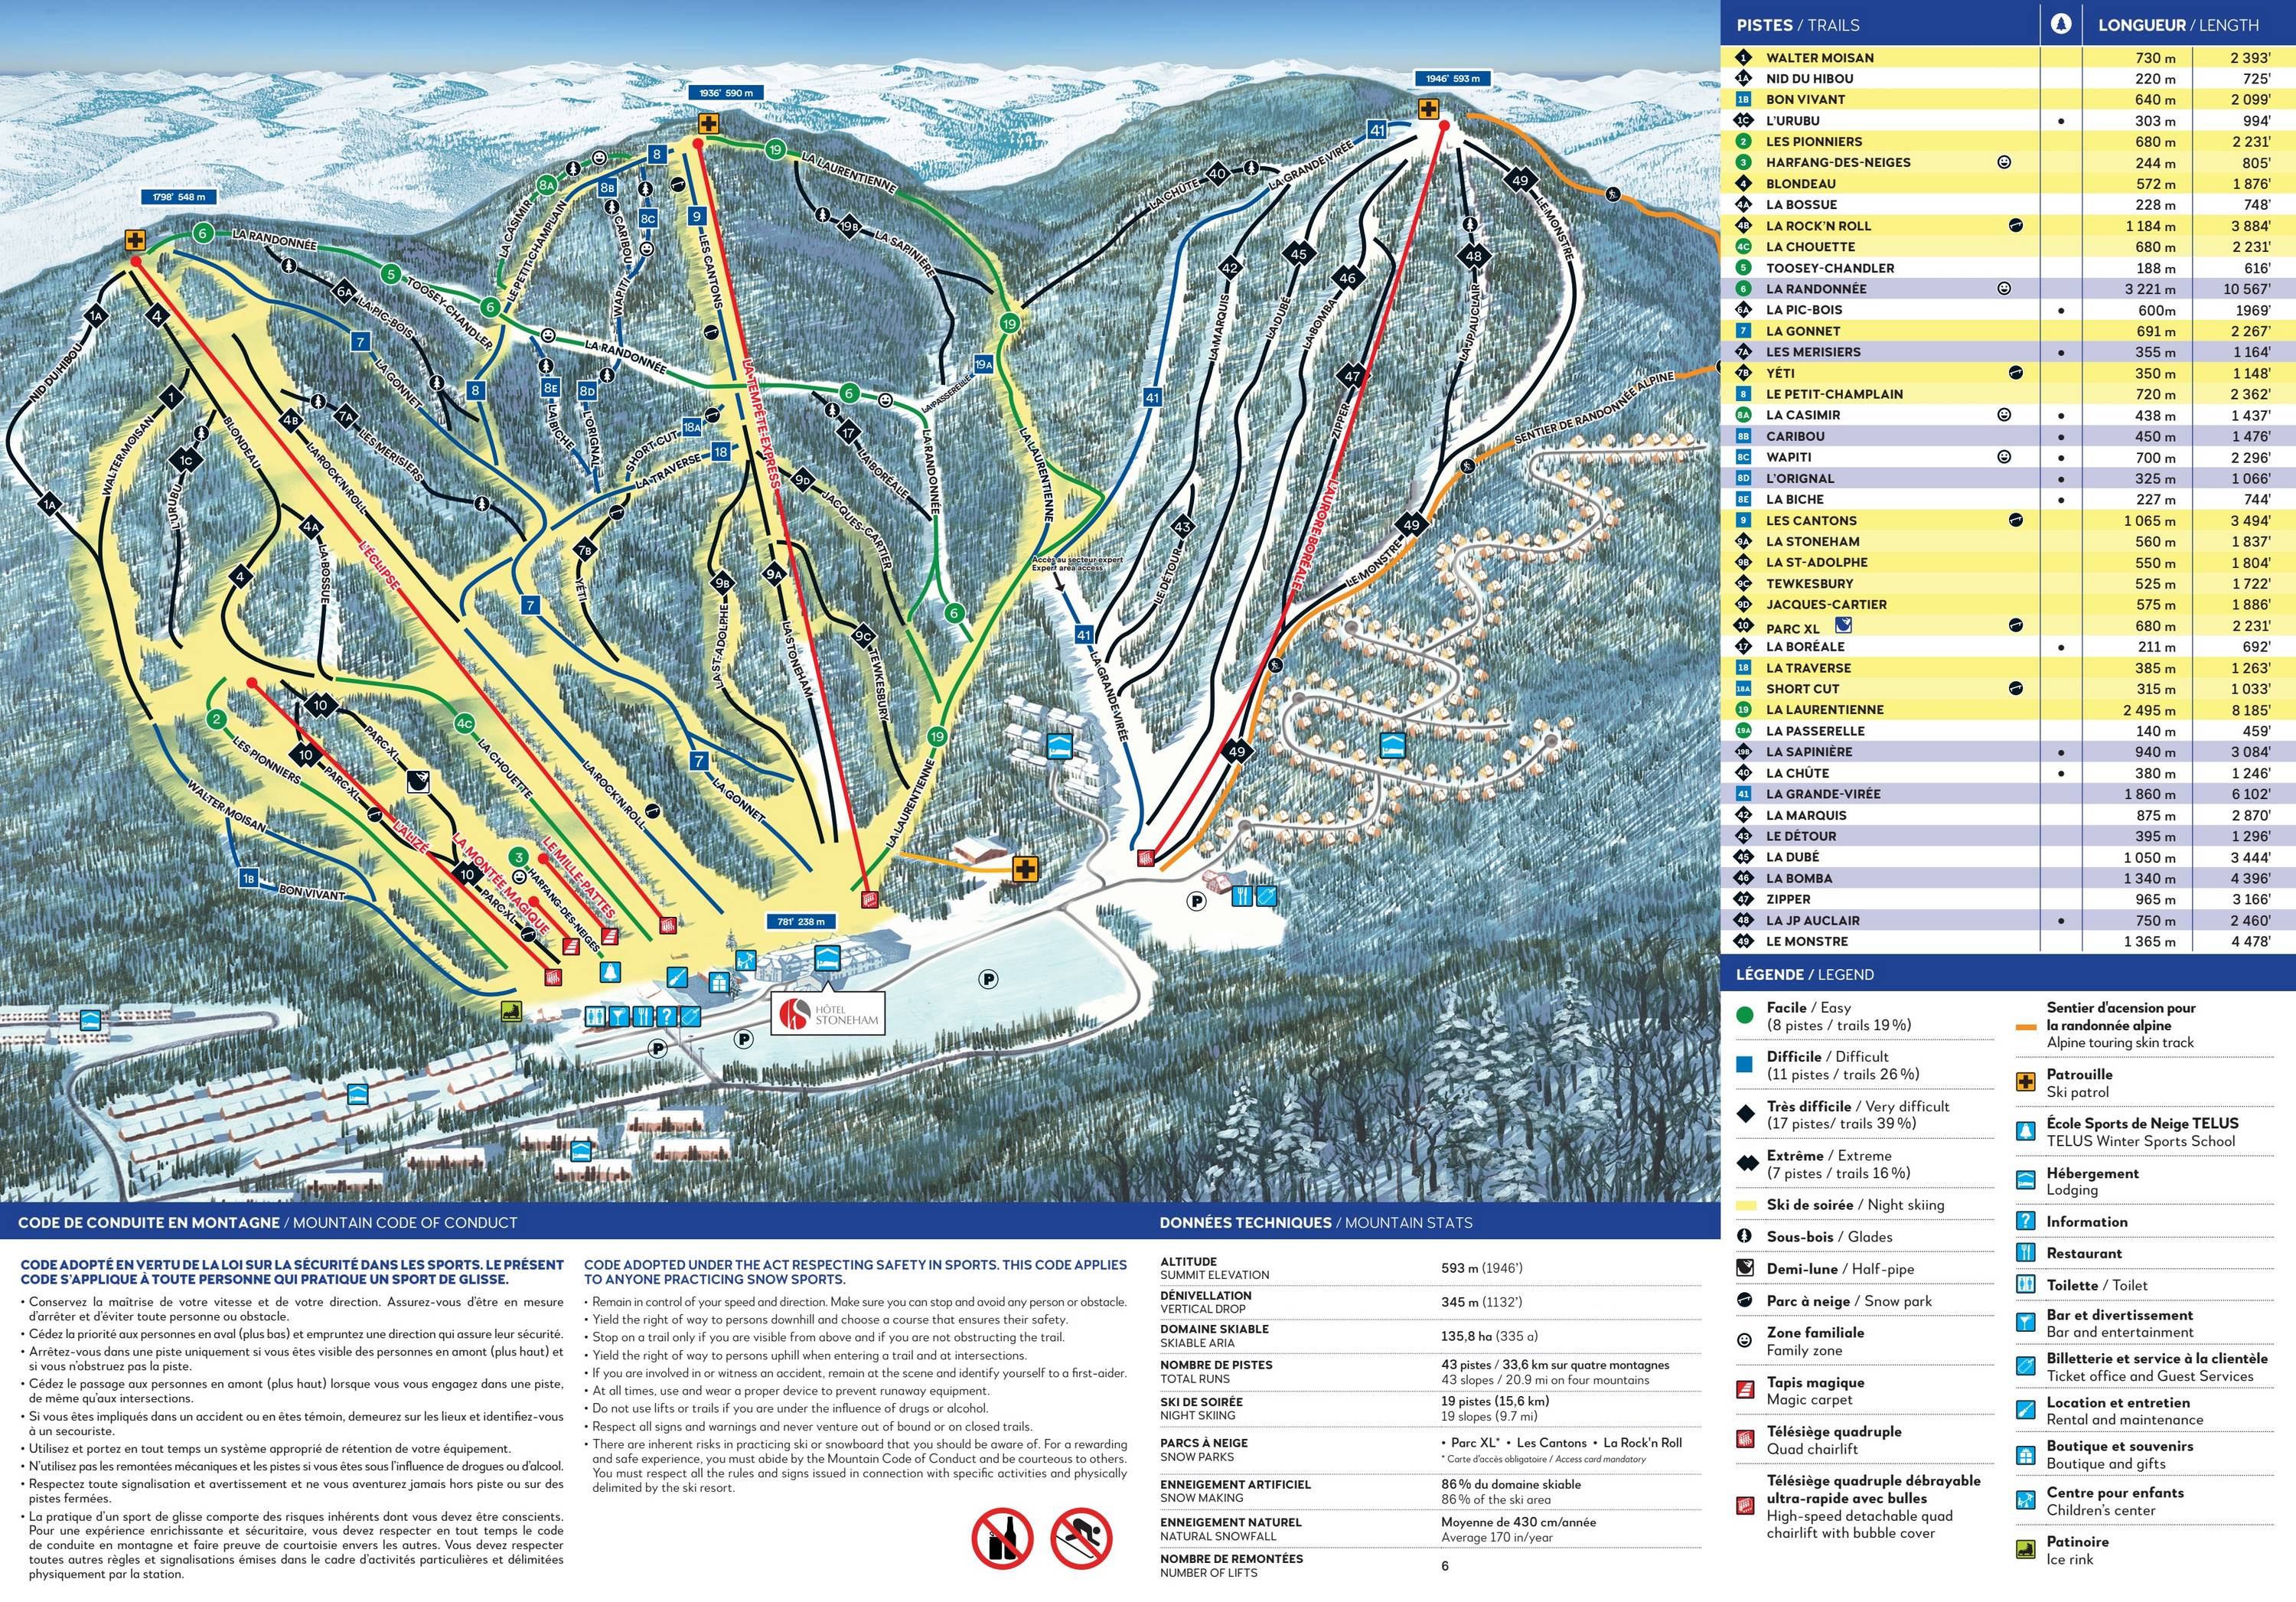 Stoneham Mountain Resort Day ski ticket